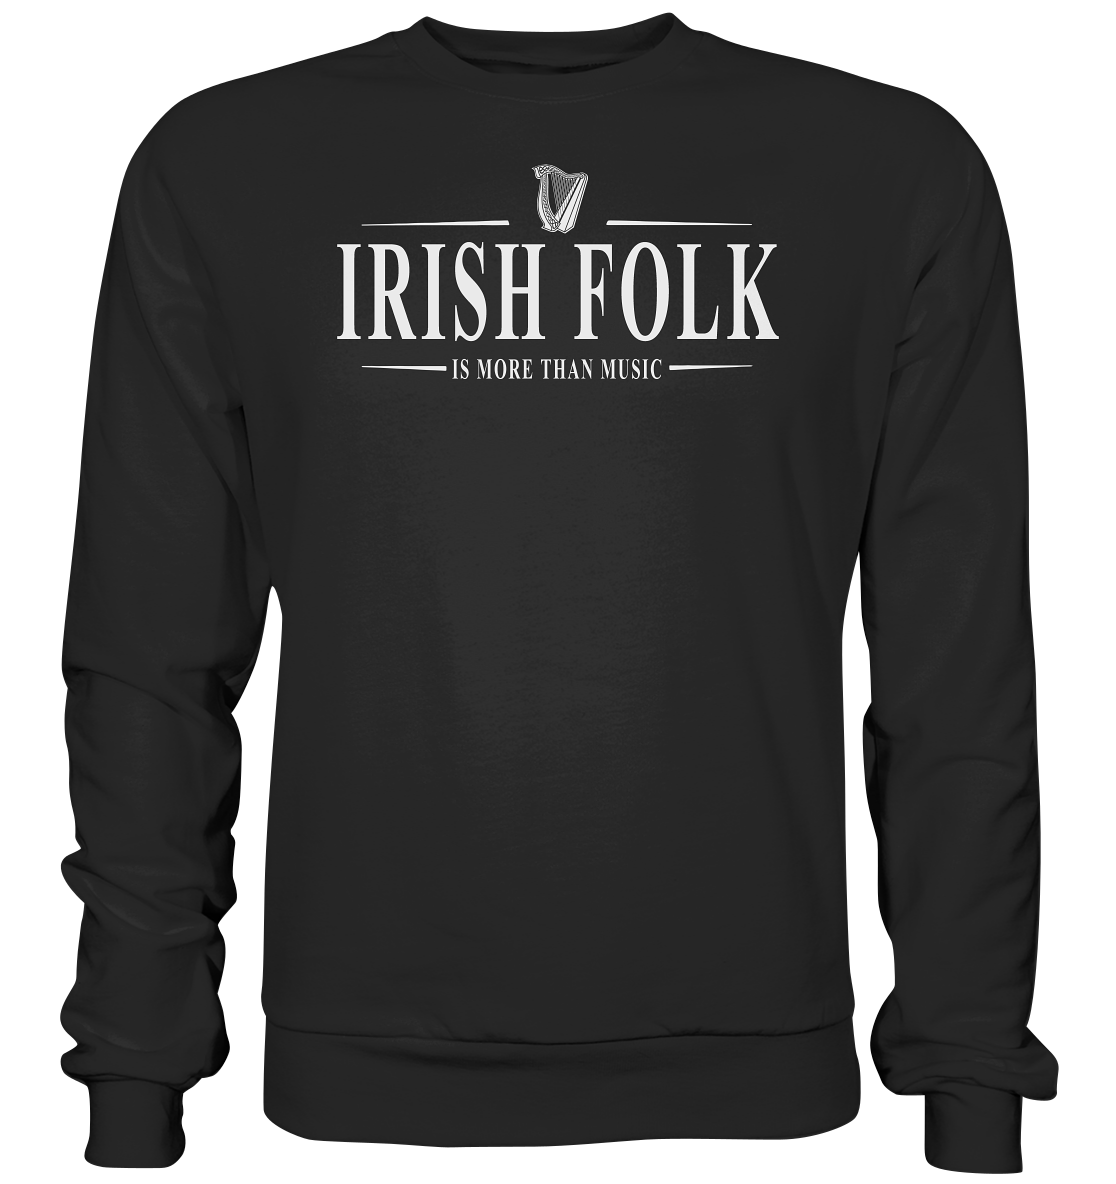 Irish Folk "Is More Than Music" - Premium Sweatshirt